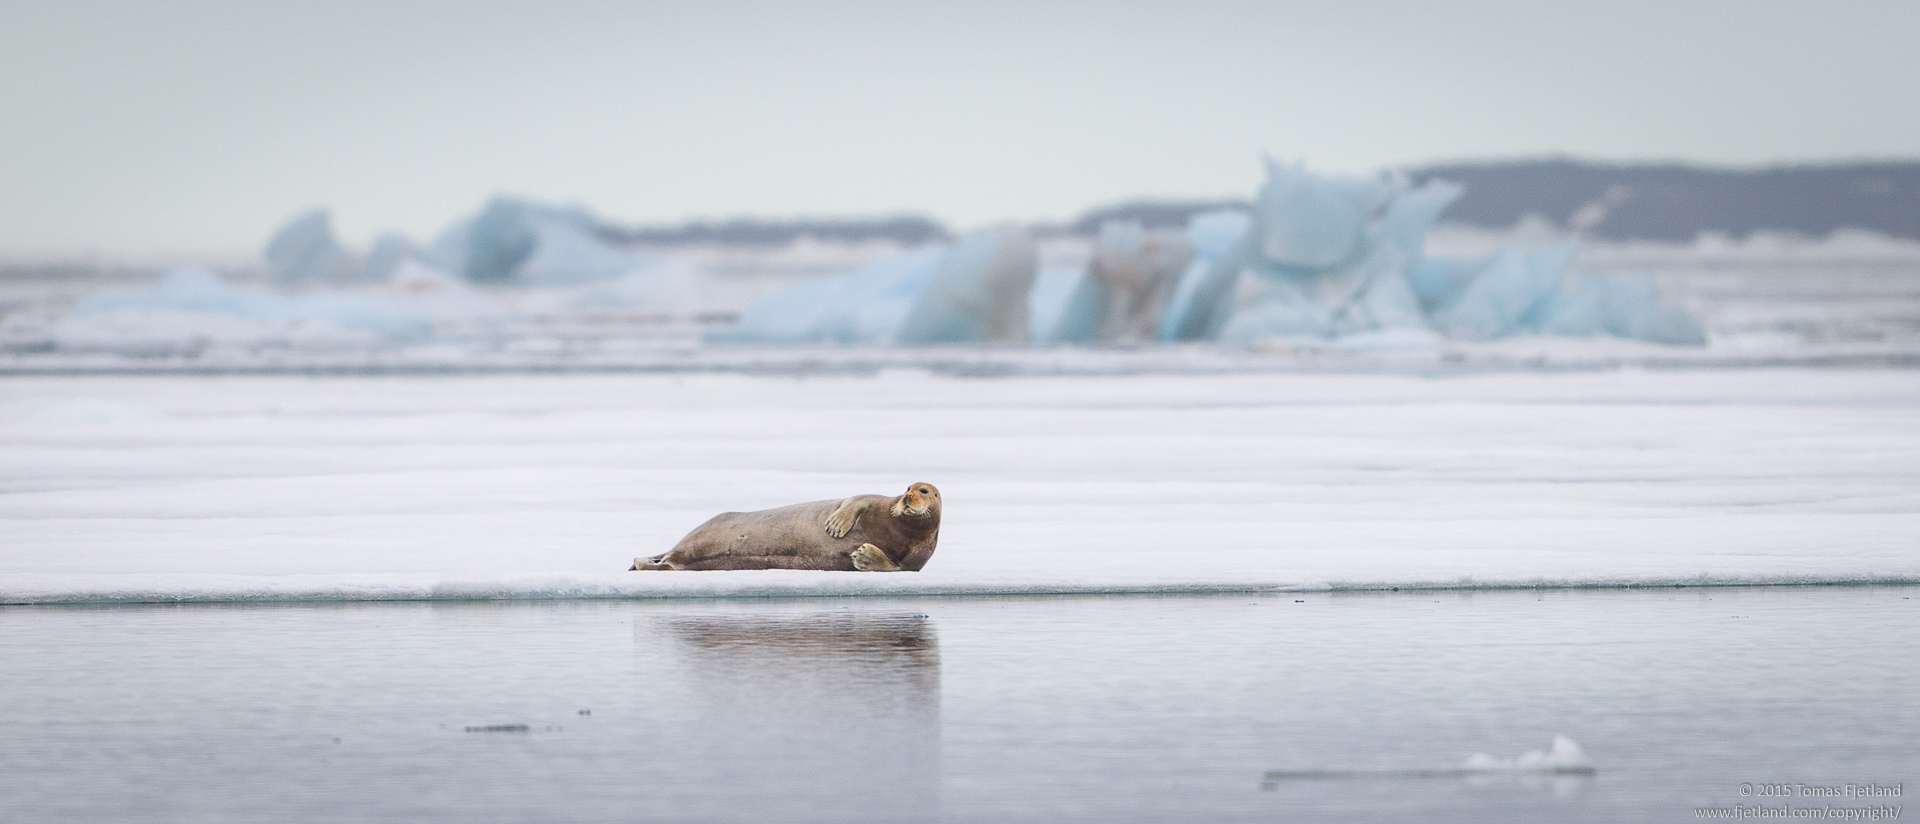 Bearded seal on ice